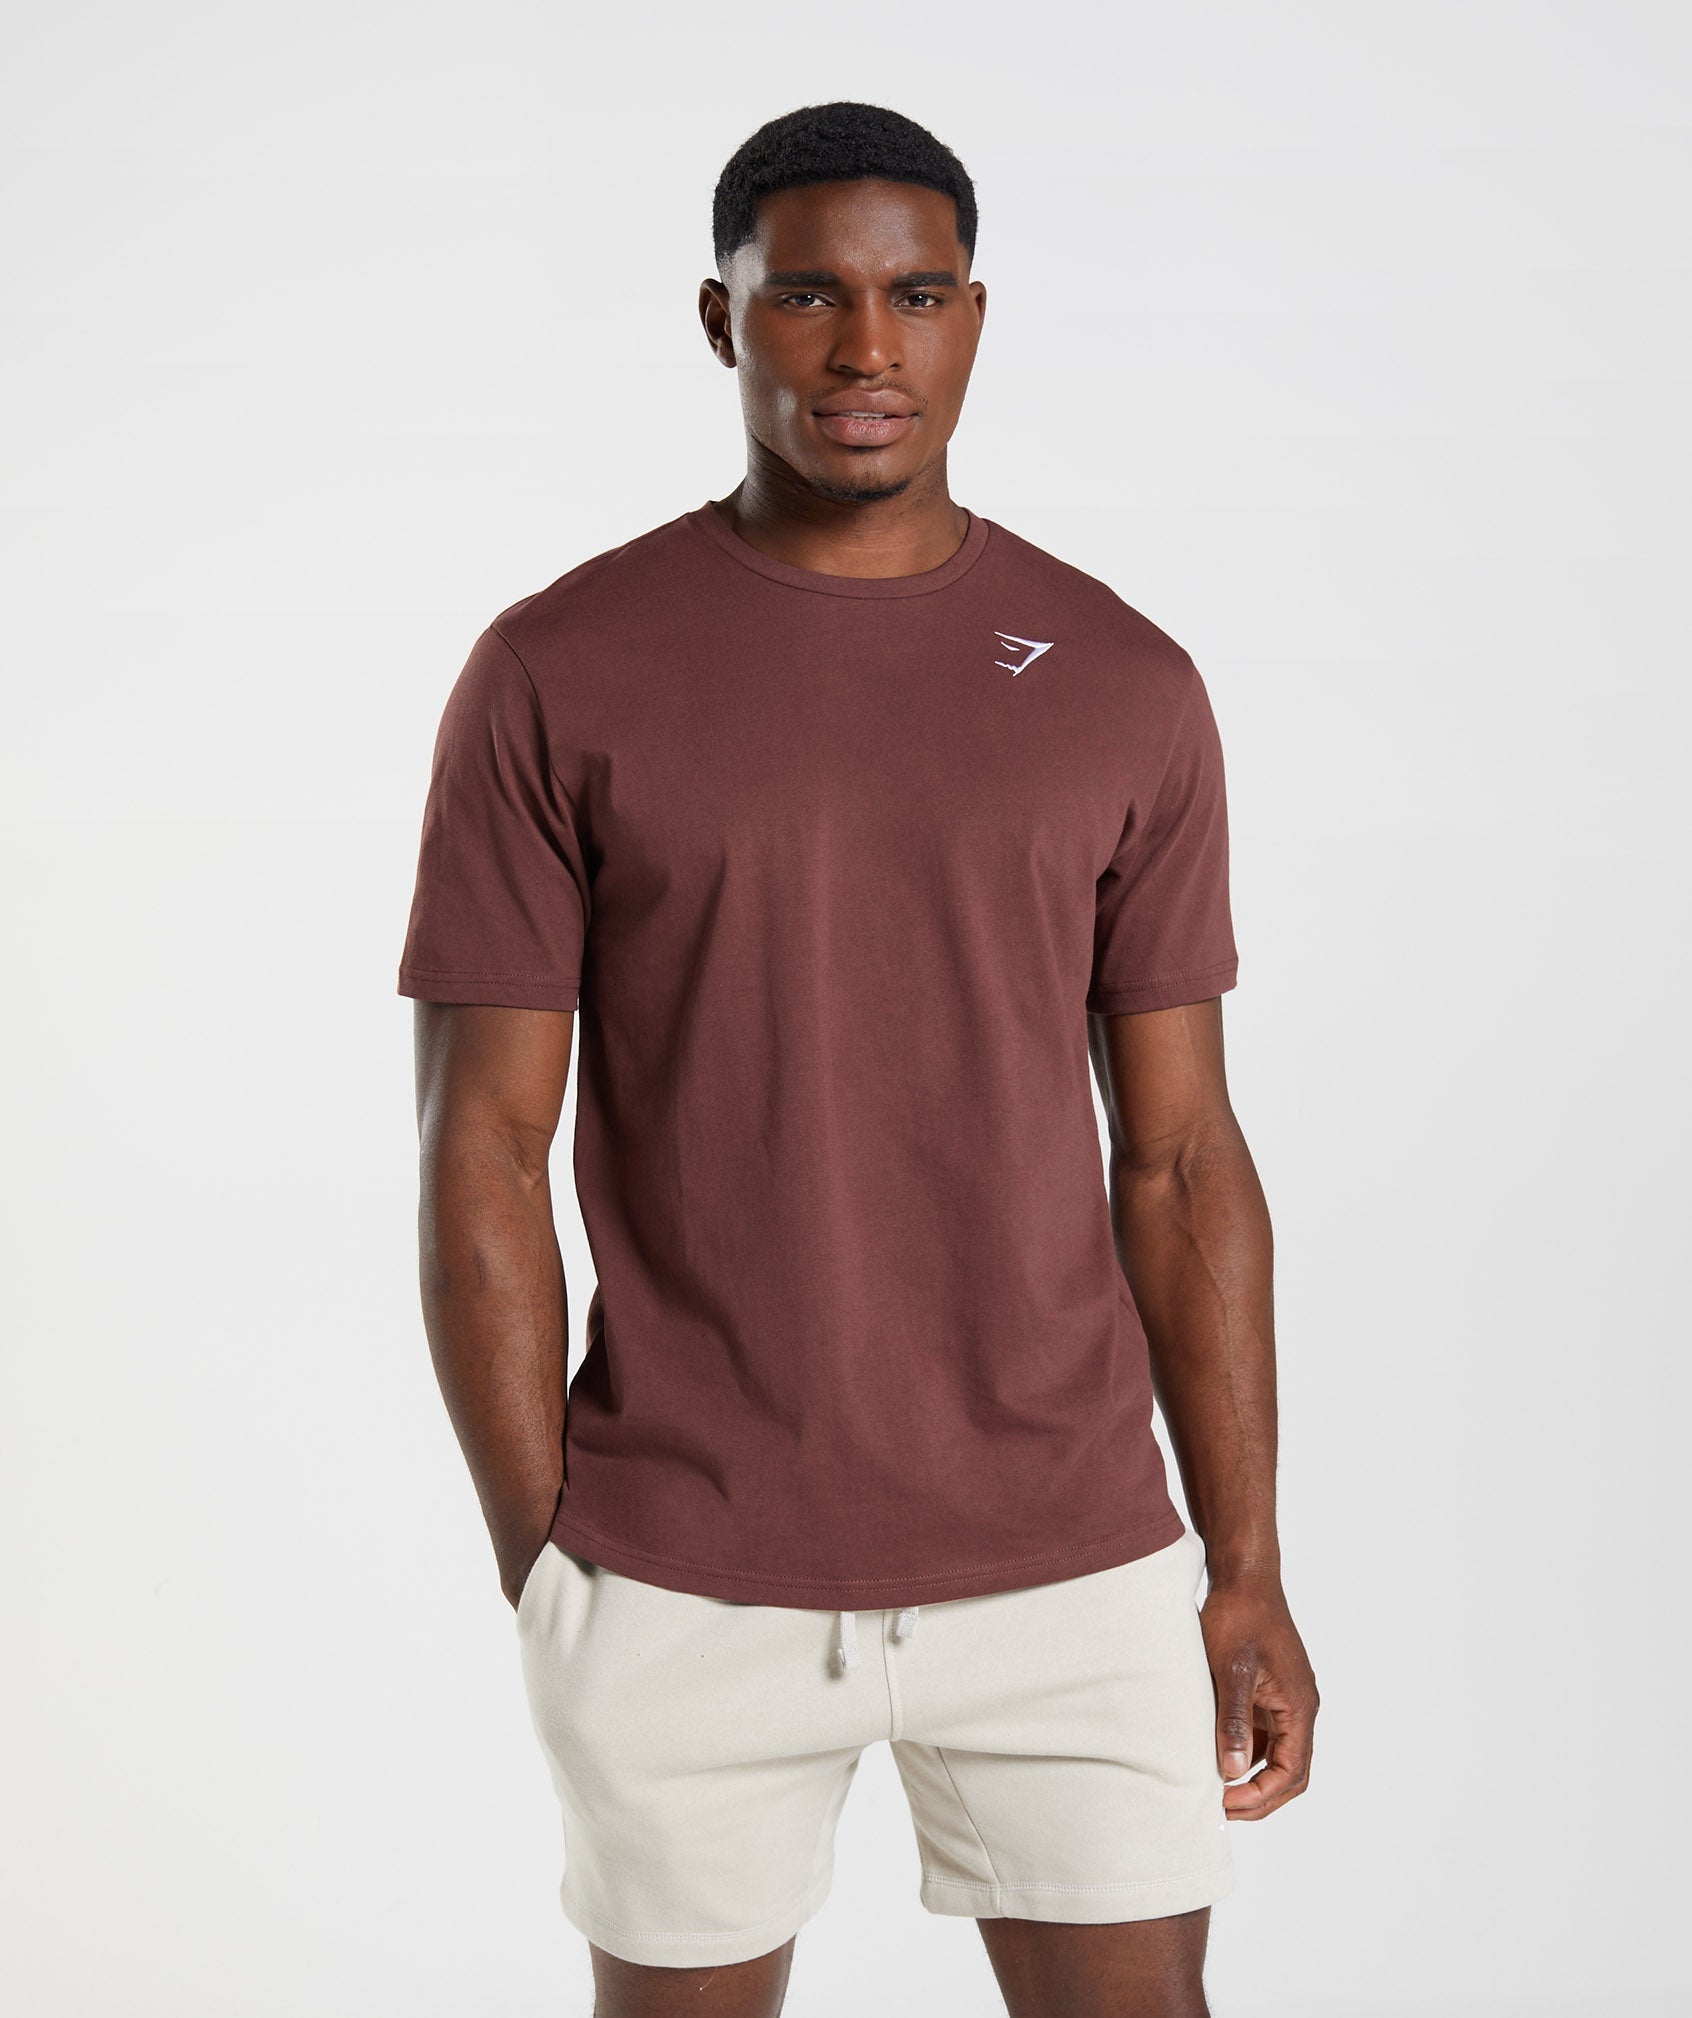 Gymshark Crest T-Shirt - Cherry Brown